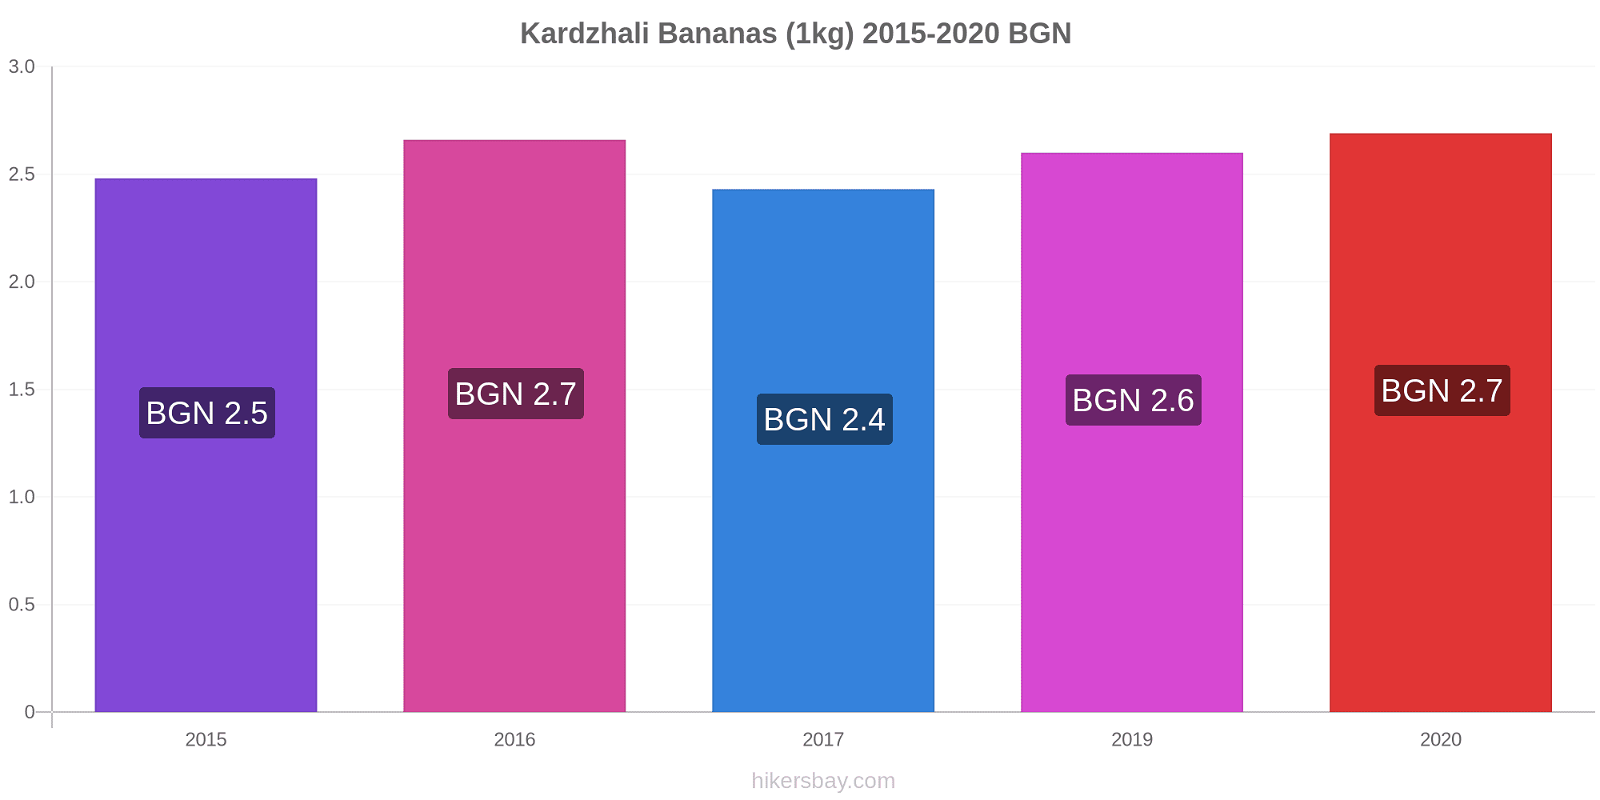 Kardzhali price changes Bananas (1kg) hikersbay.com